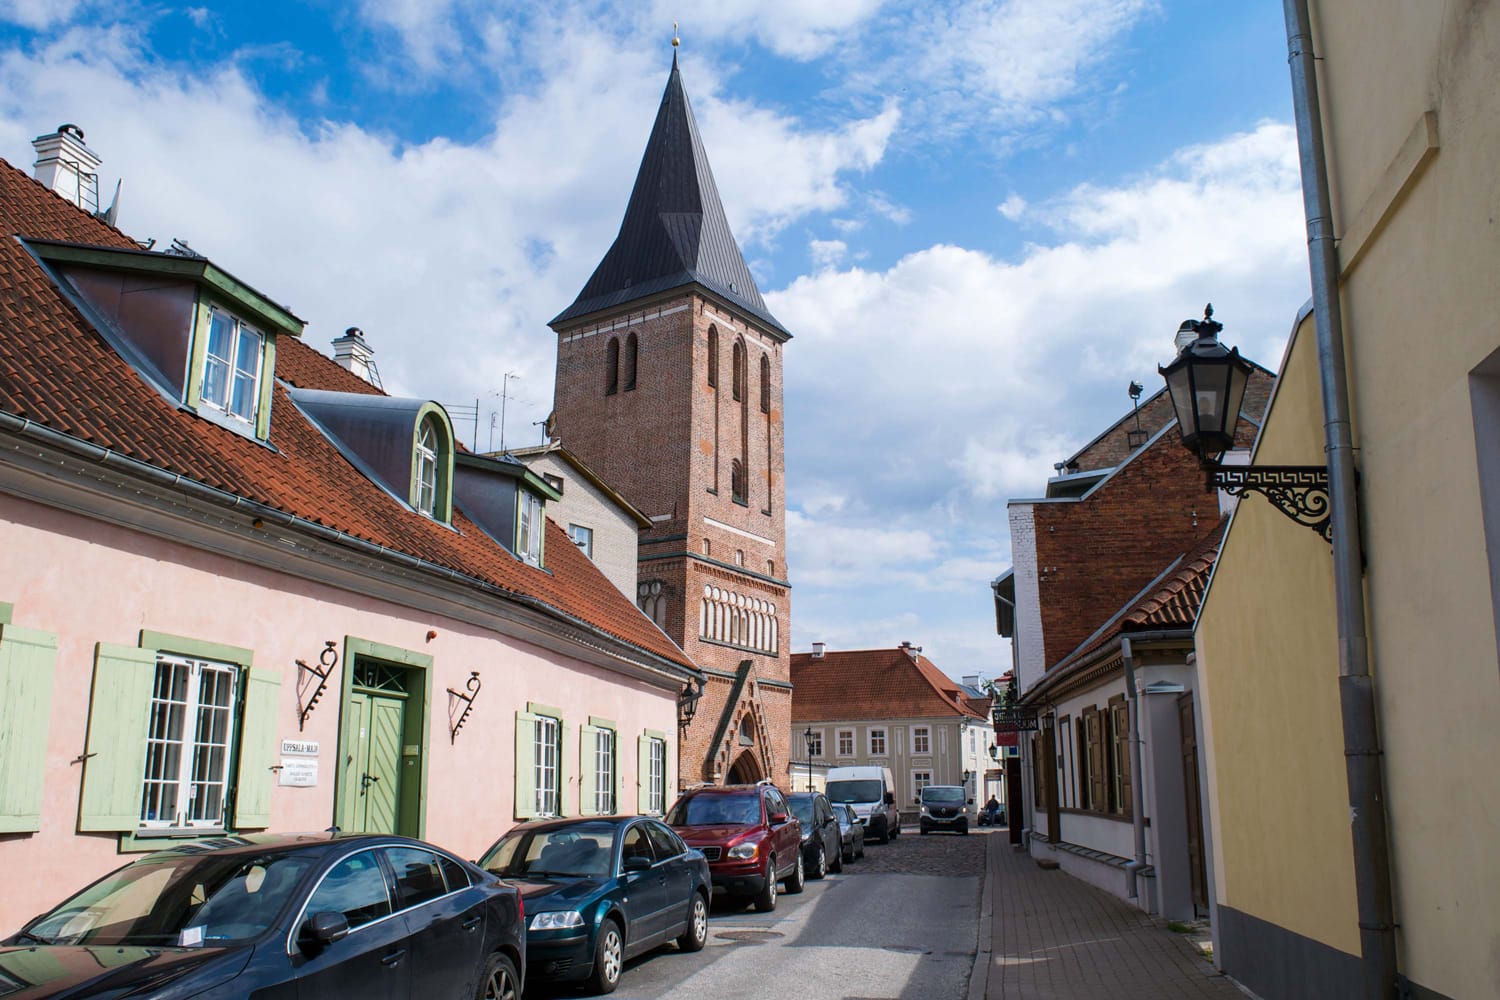 St Johns Church in Tartu, Estonia